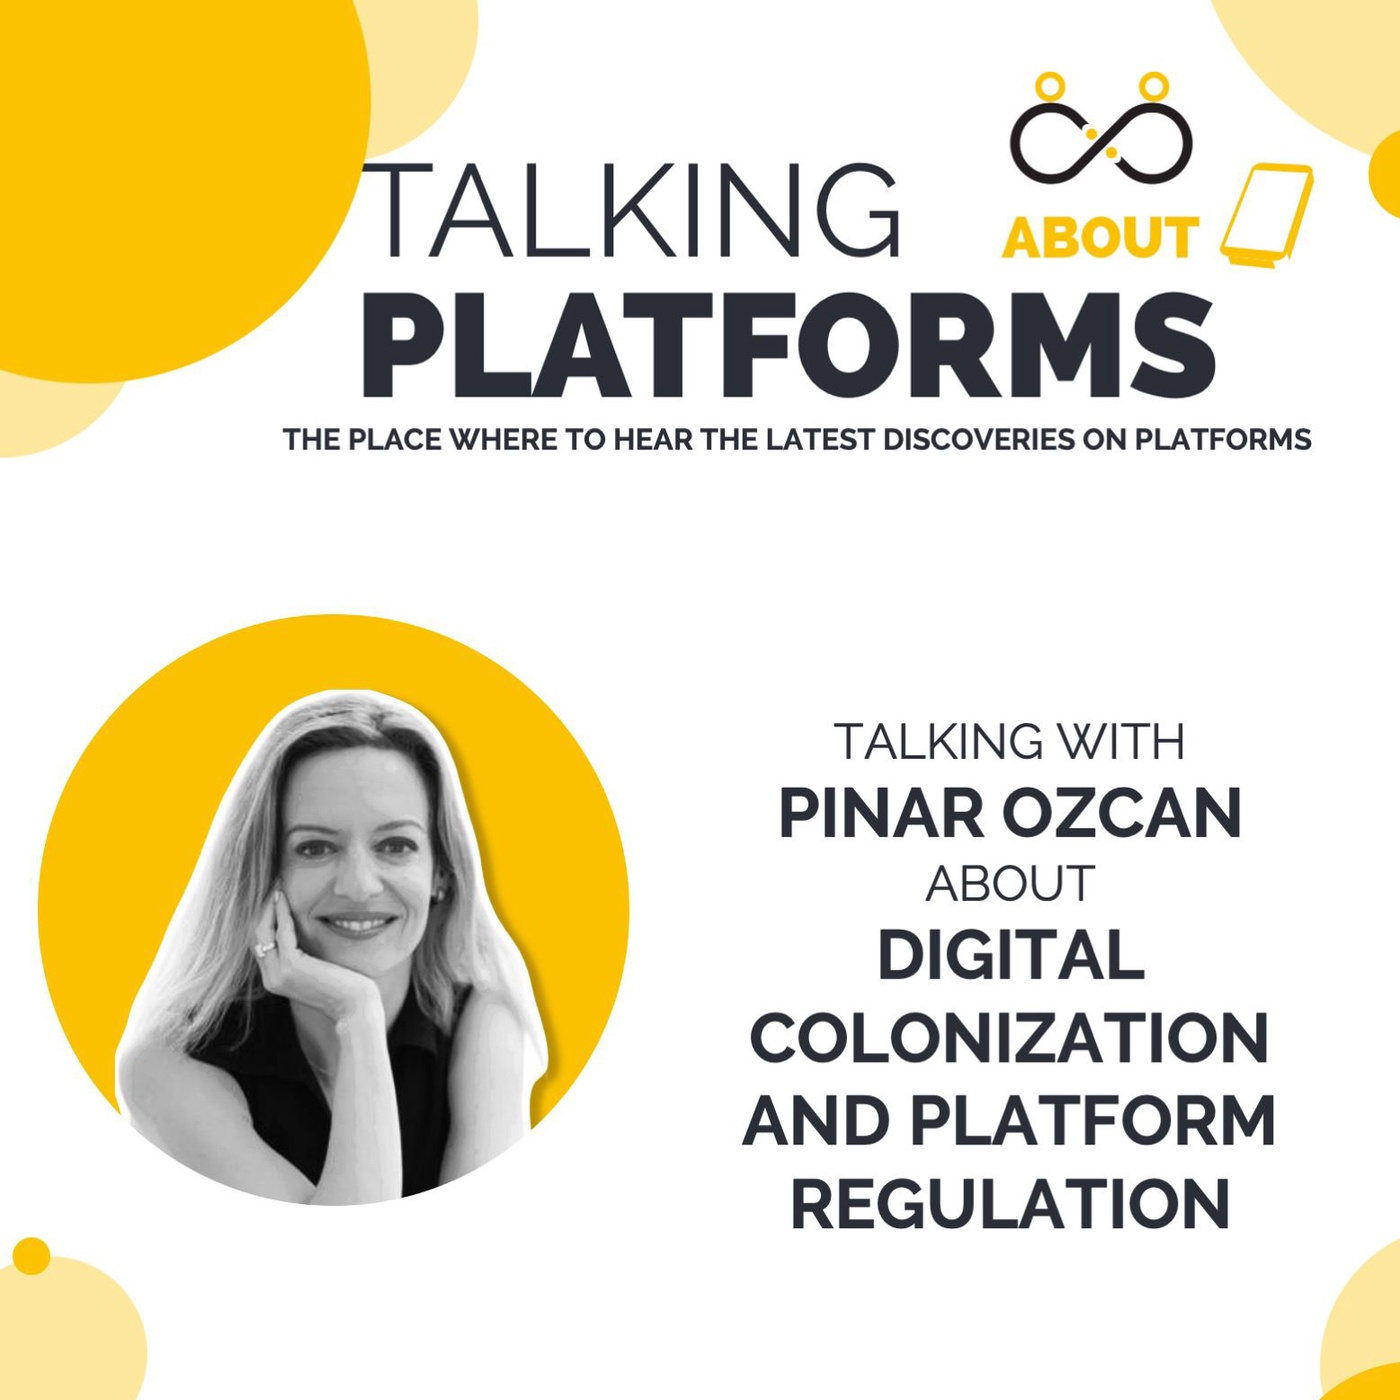 Digital colonization and platform regulation with Pinar Ozcan